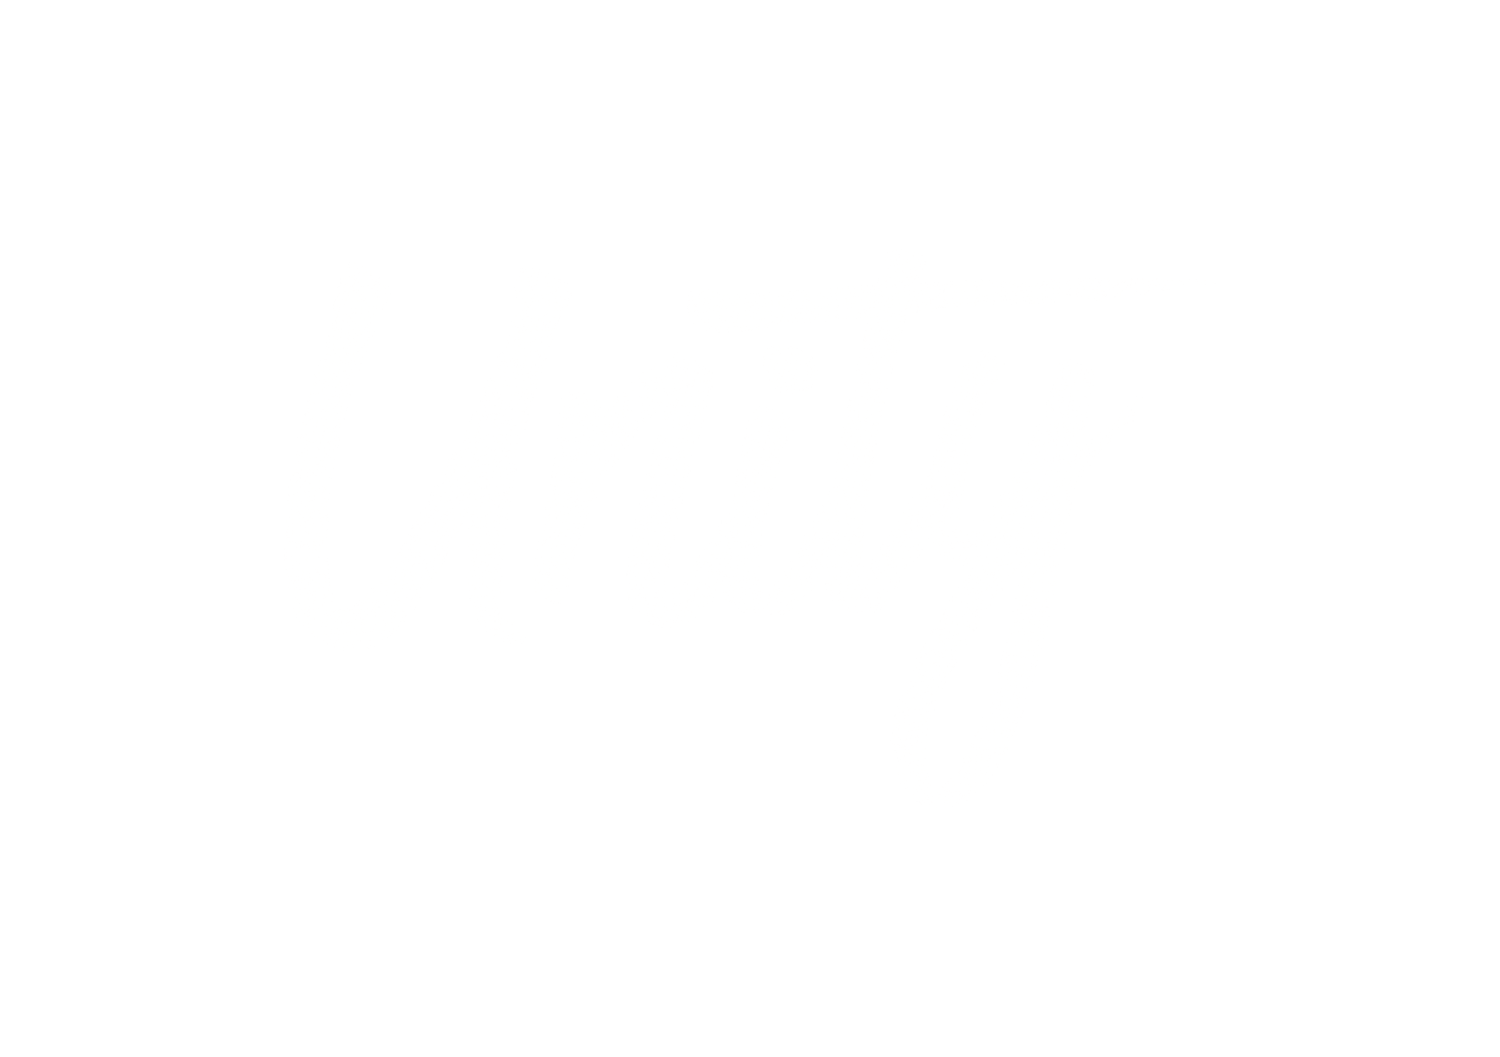 Unity Group